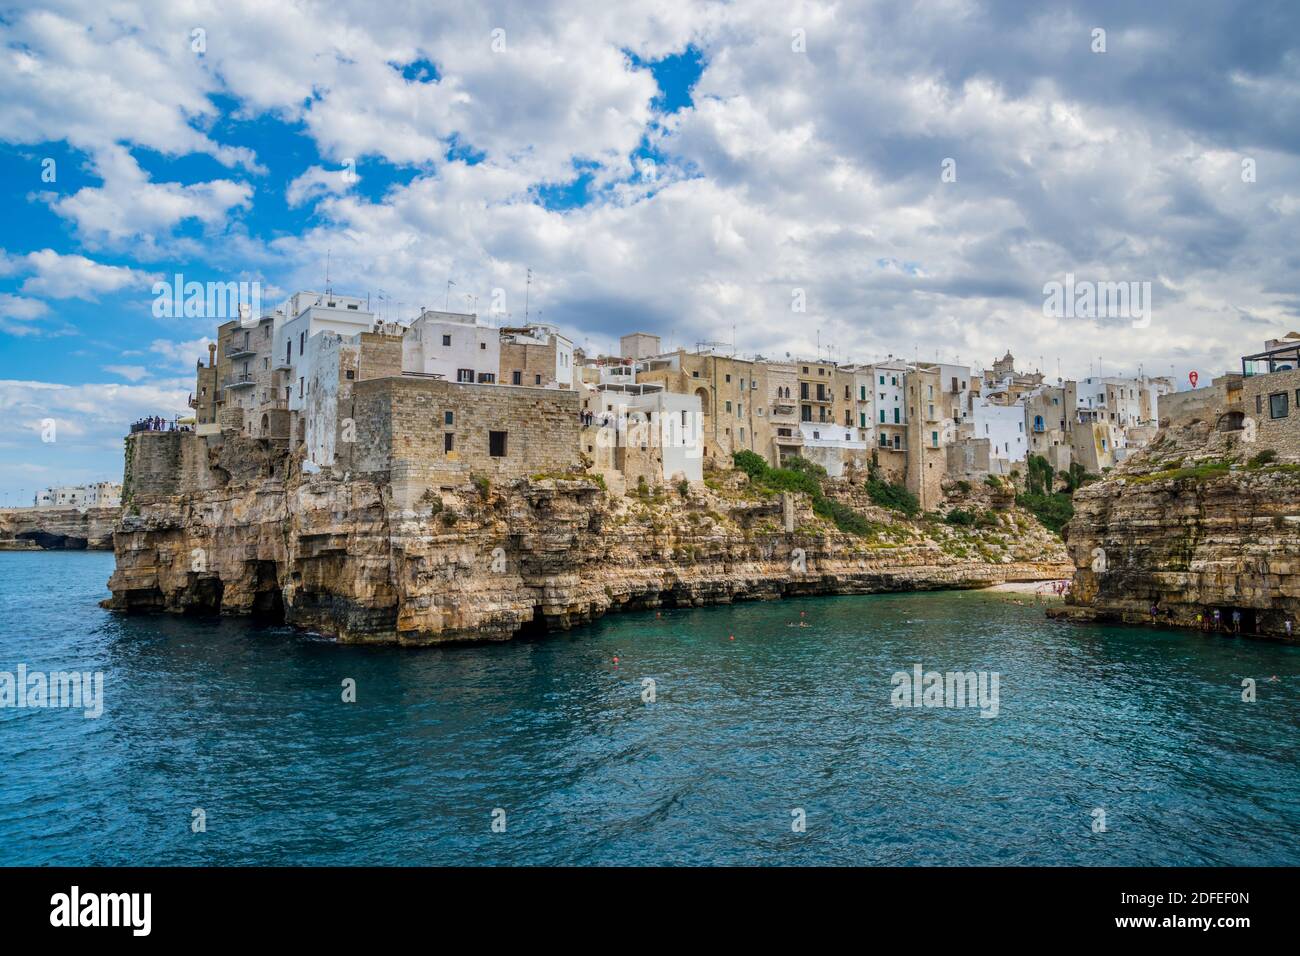 Cliffs of Polignano a Mare on a warm and sunny day, Puglia, Italy Stock Photo